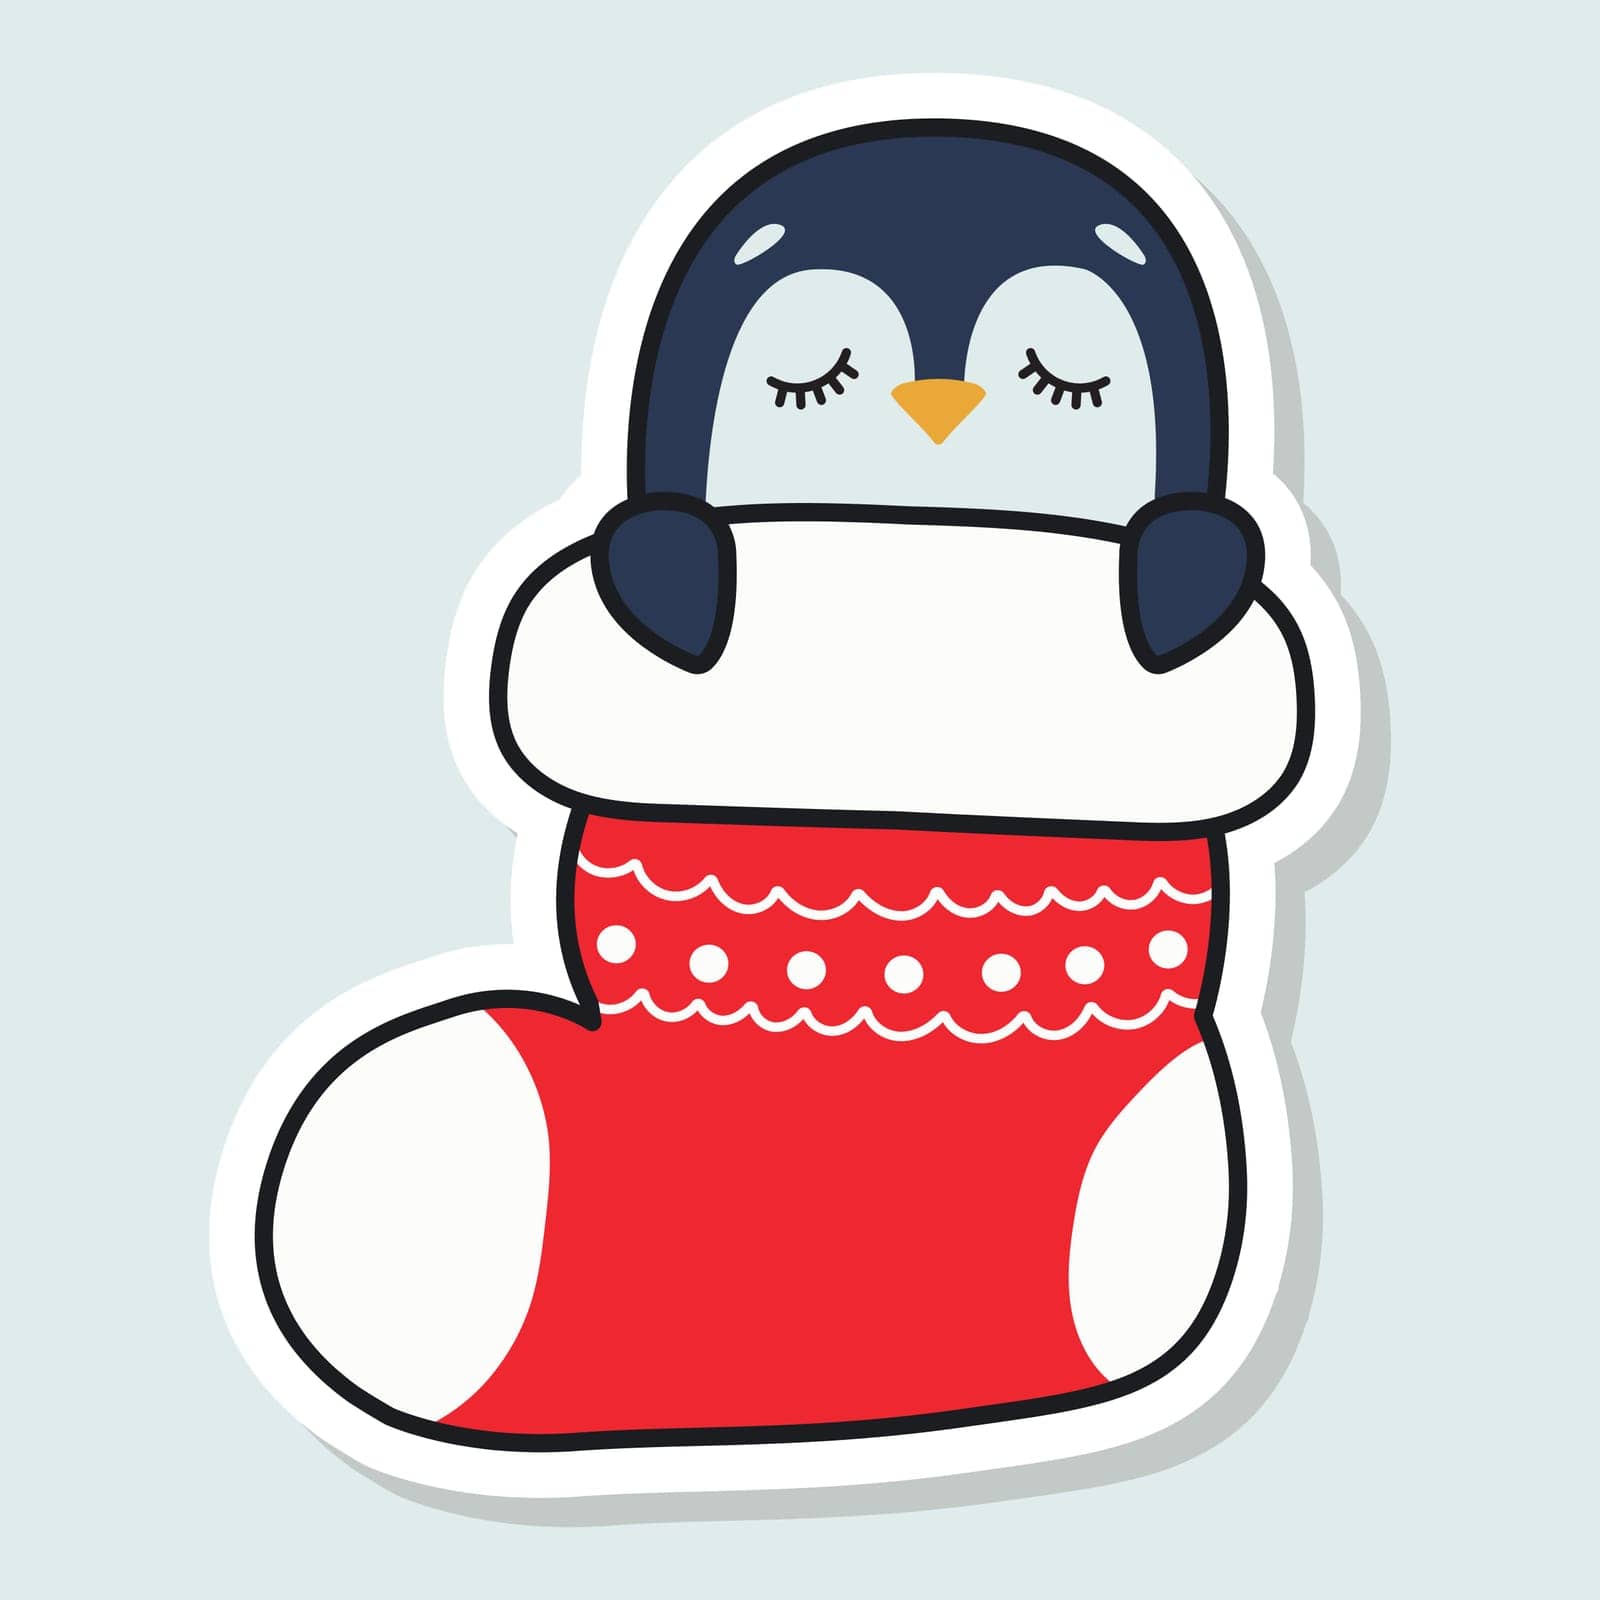 Cute penguin sleeps in a Christmas stocking. Happy Holidays. Winter animal. Vector illustration